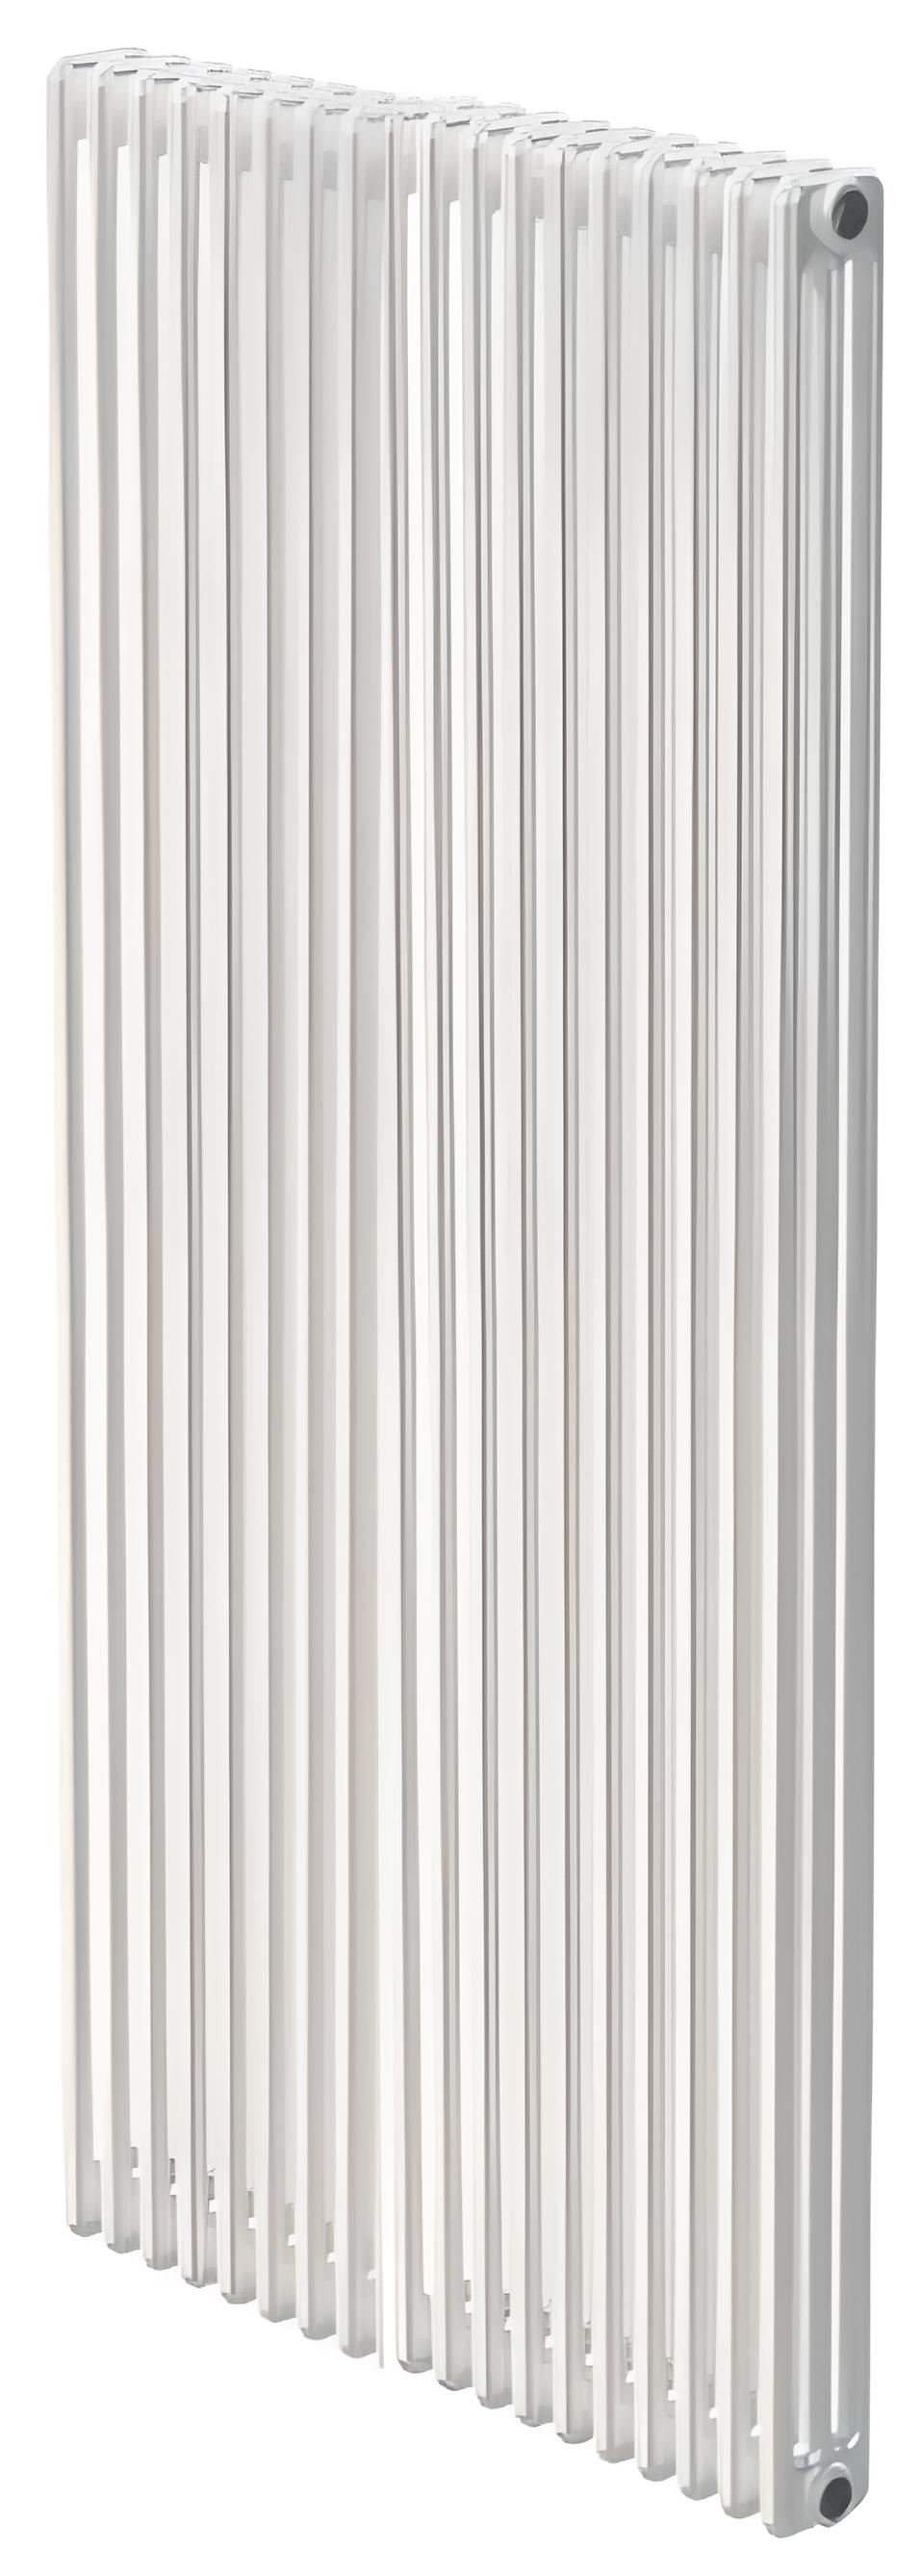 Дизайн-радиатор Cordivari Ardesia 3 колонны 18 секций H2200 мм R02 RAL 9016 (BIANCO TRAFFICO)